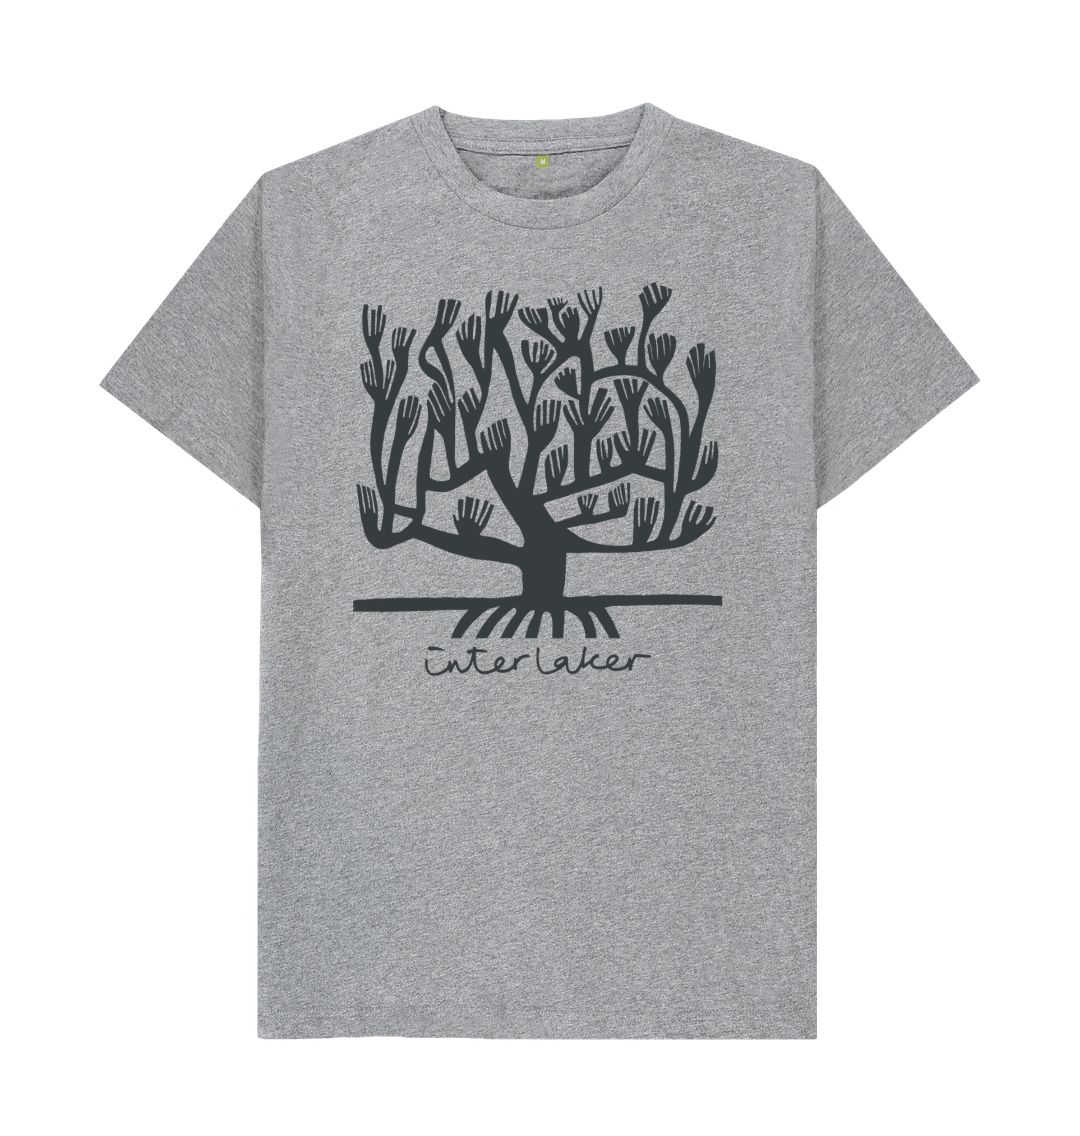 Athletic Grey Interlaker - 'Roots' T-Shirt (Dark Print)